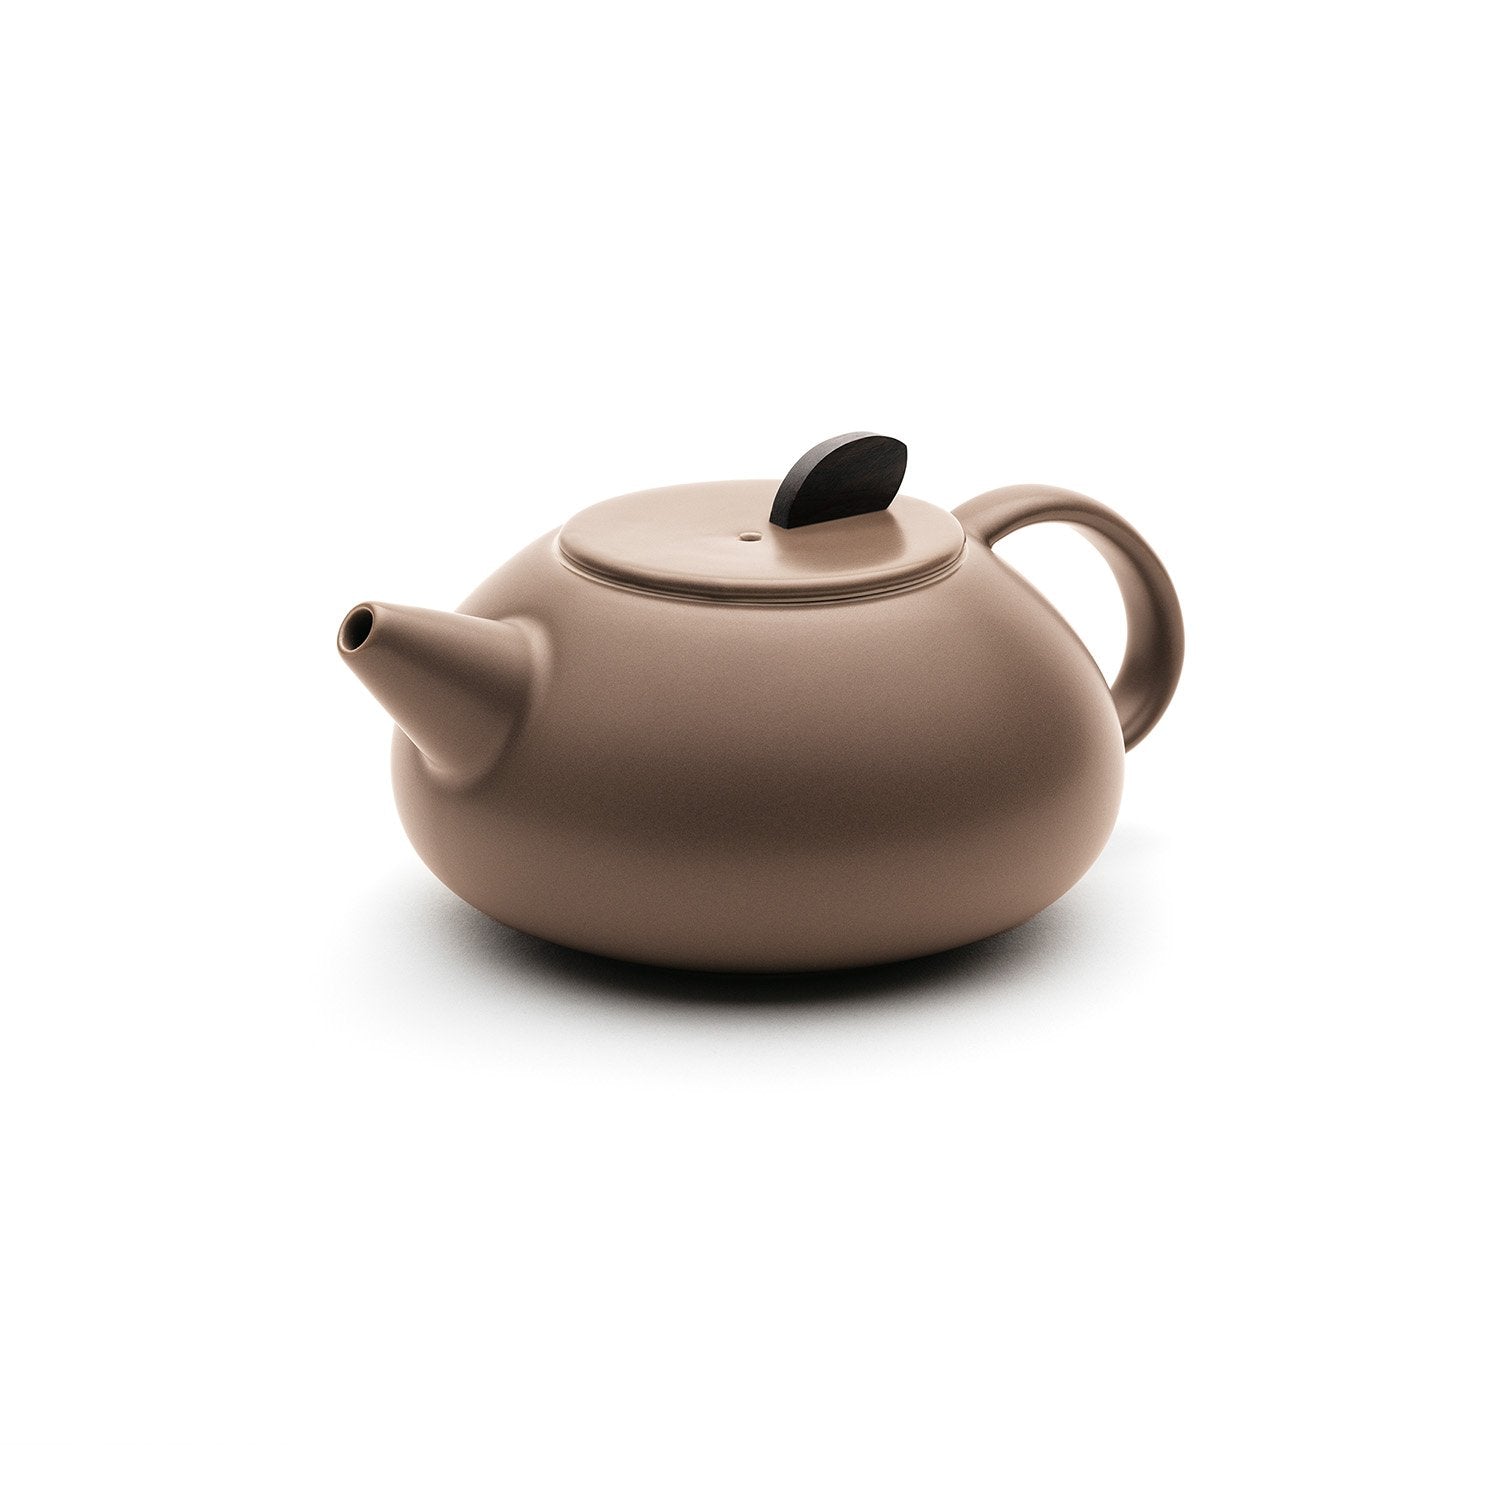 Brown small teapot